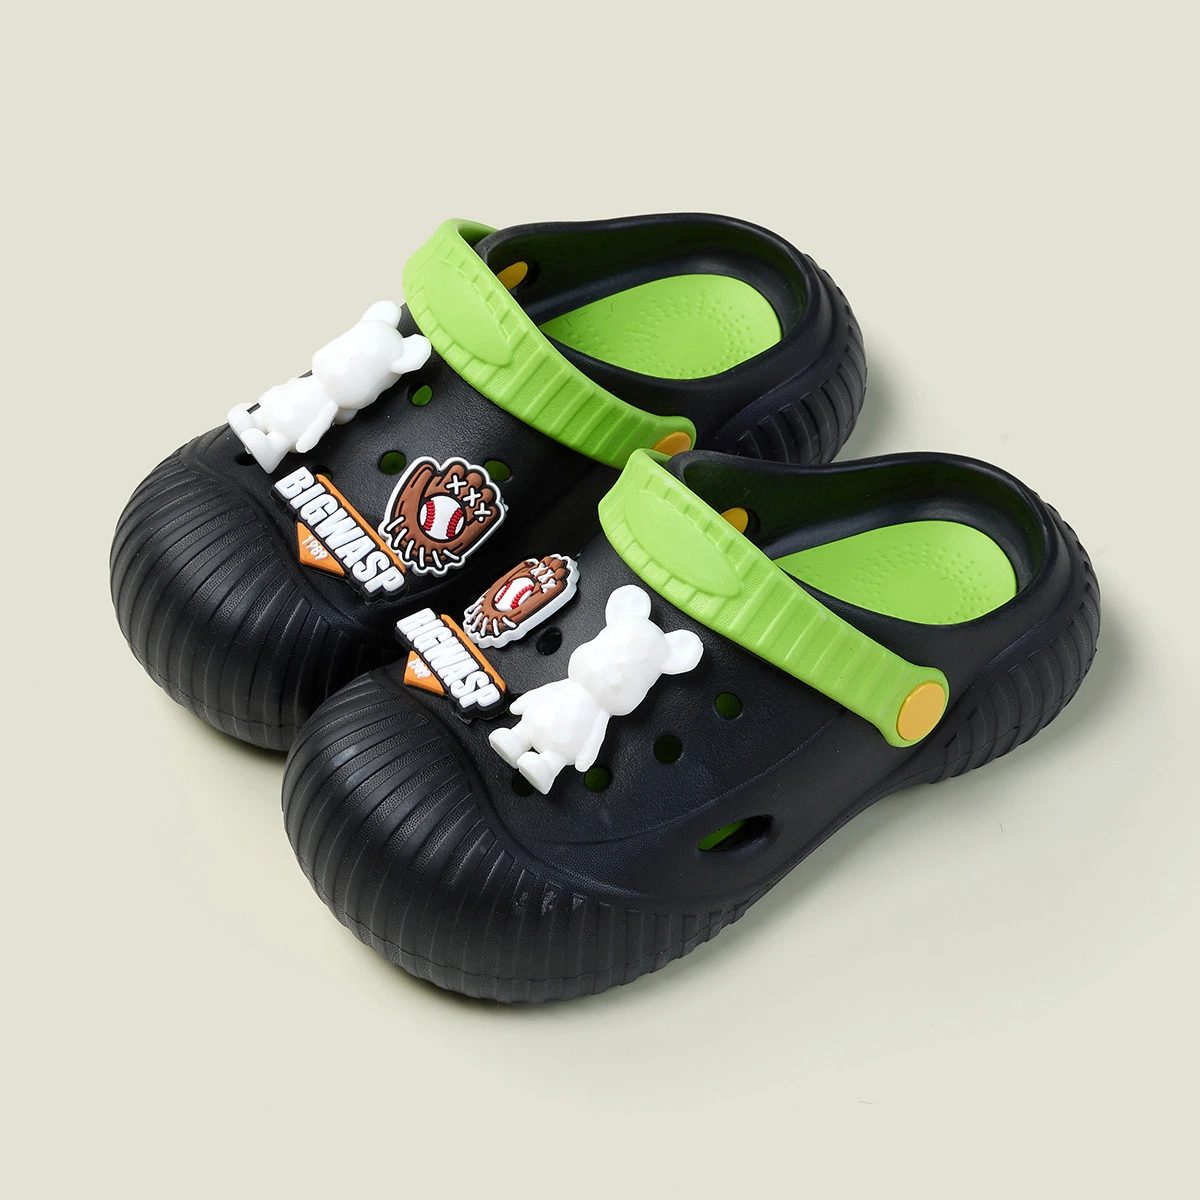 New Summer Children DIY Wear-Resistant Soft Sole Non-Slip Men's and Women's Treasure Croc Shoes Outdoor Dual Purpose Sandals